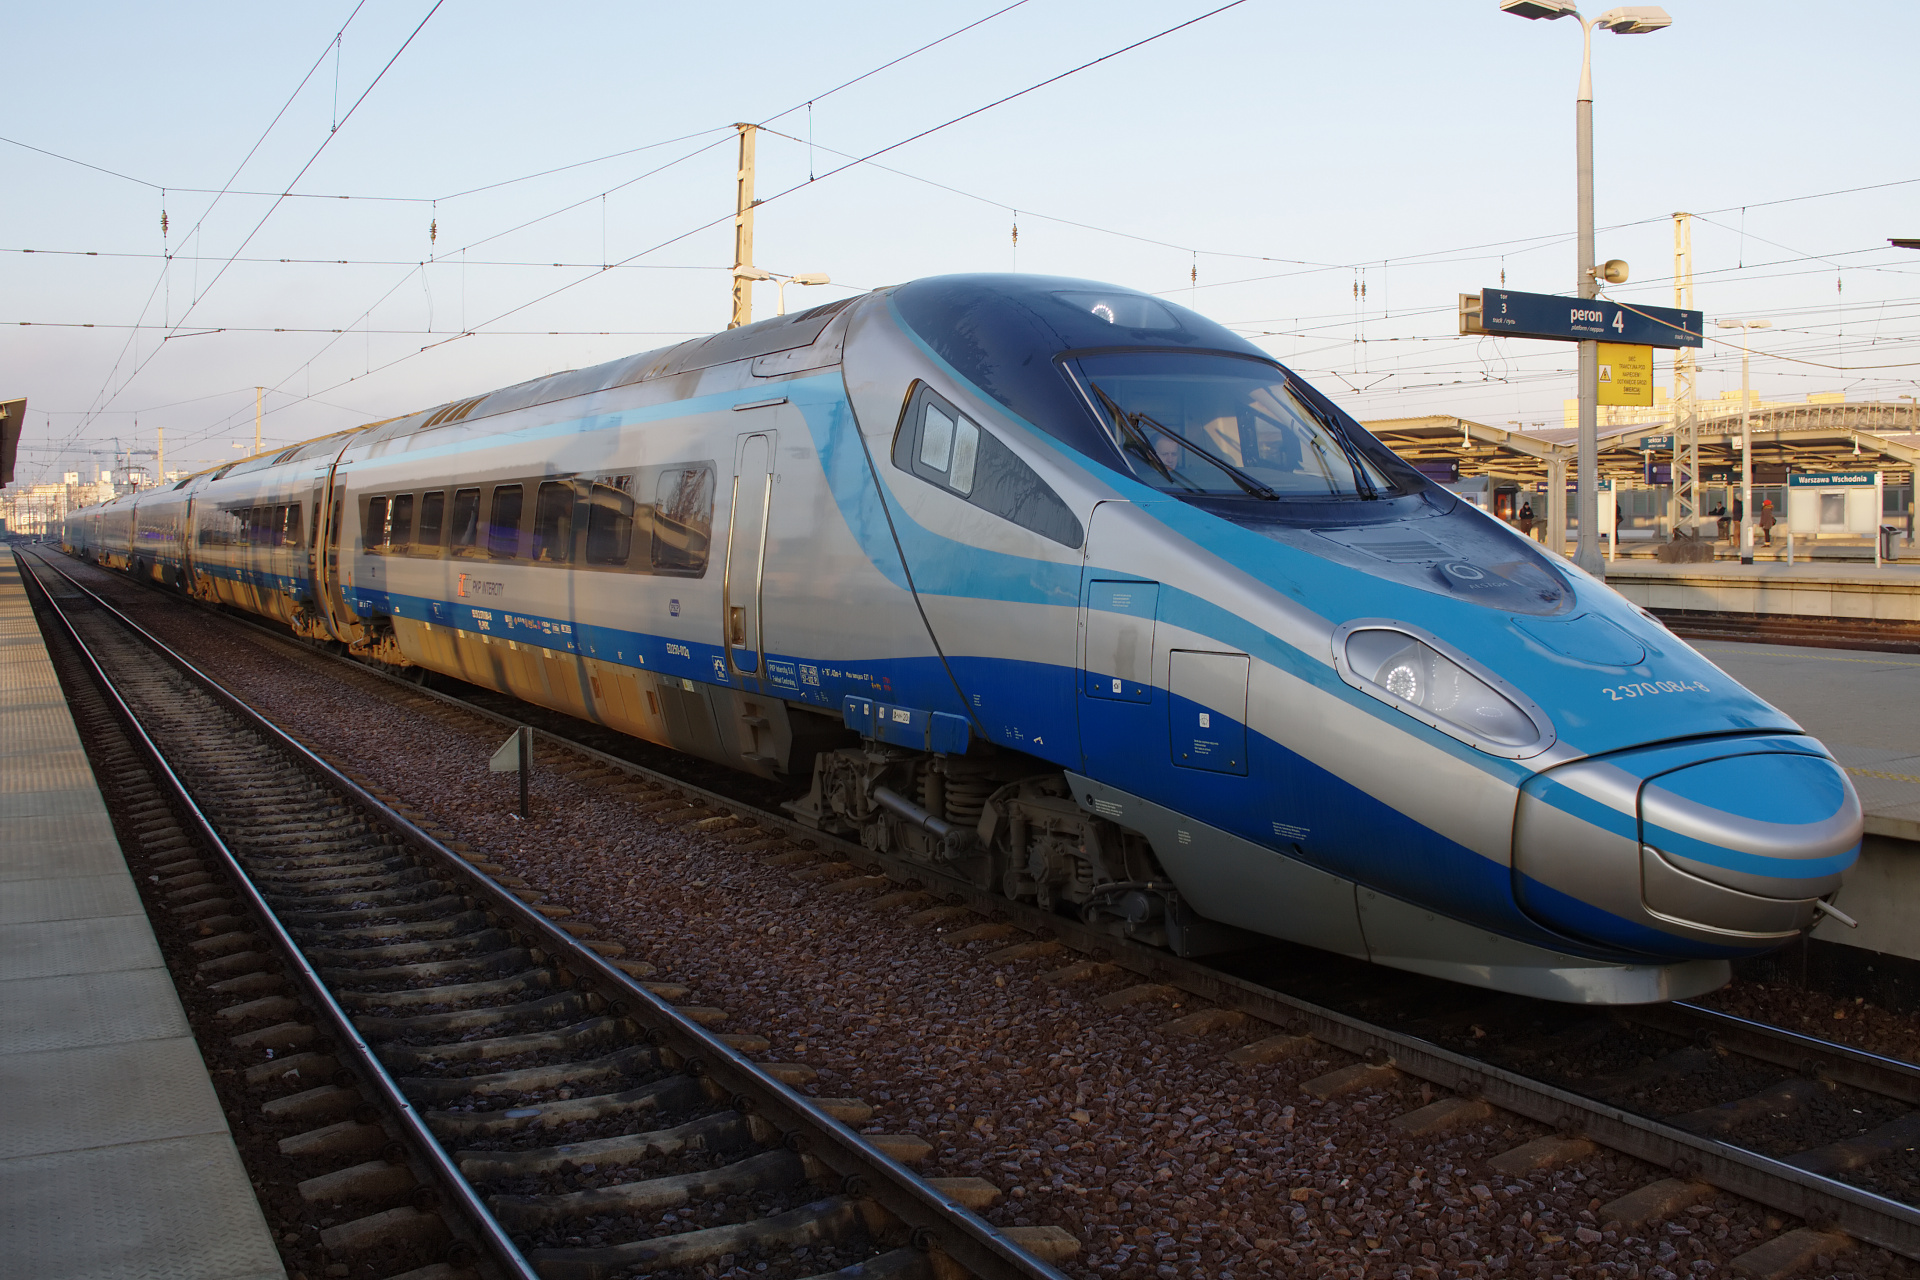 ED250-012 (Vehicles » Trains and Locomotives » Alstom ETR 610 Pendolino)